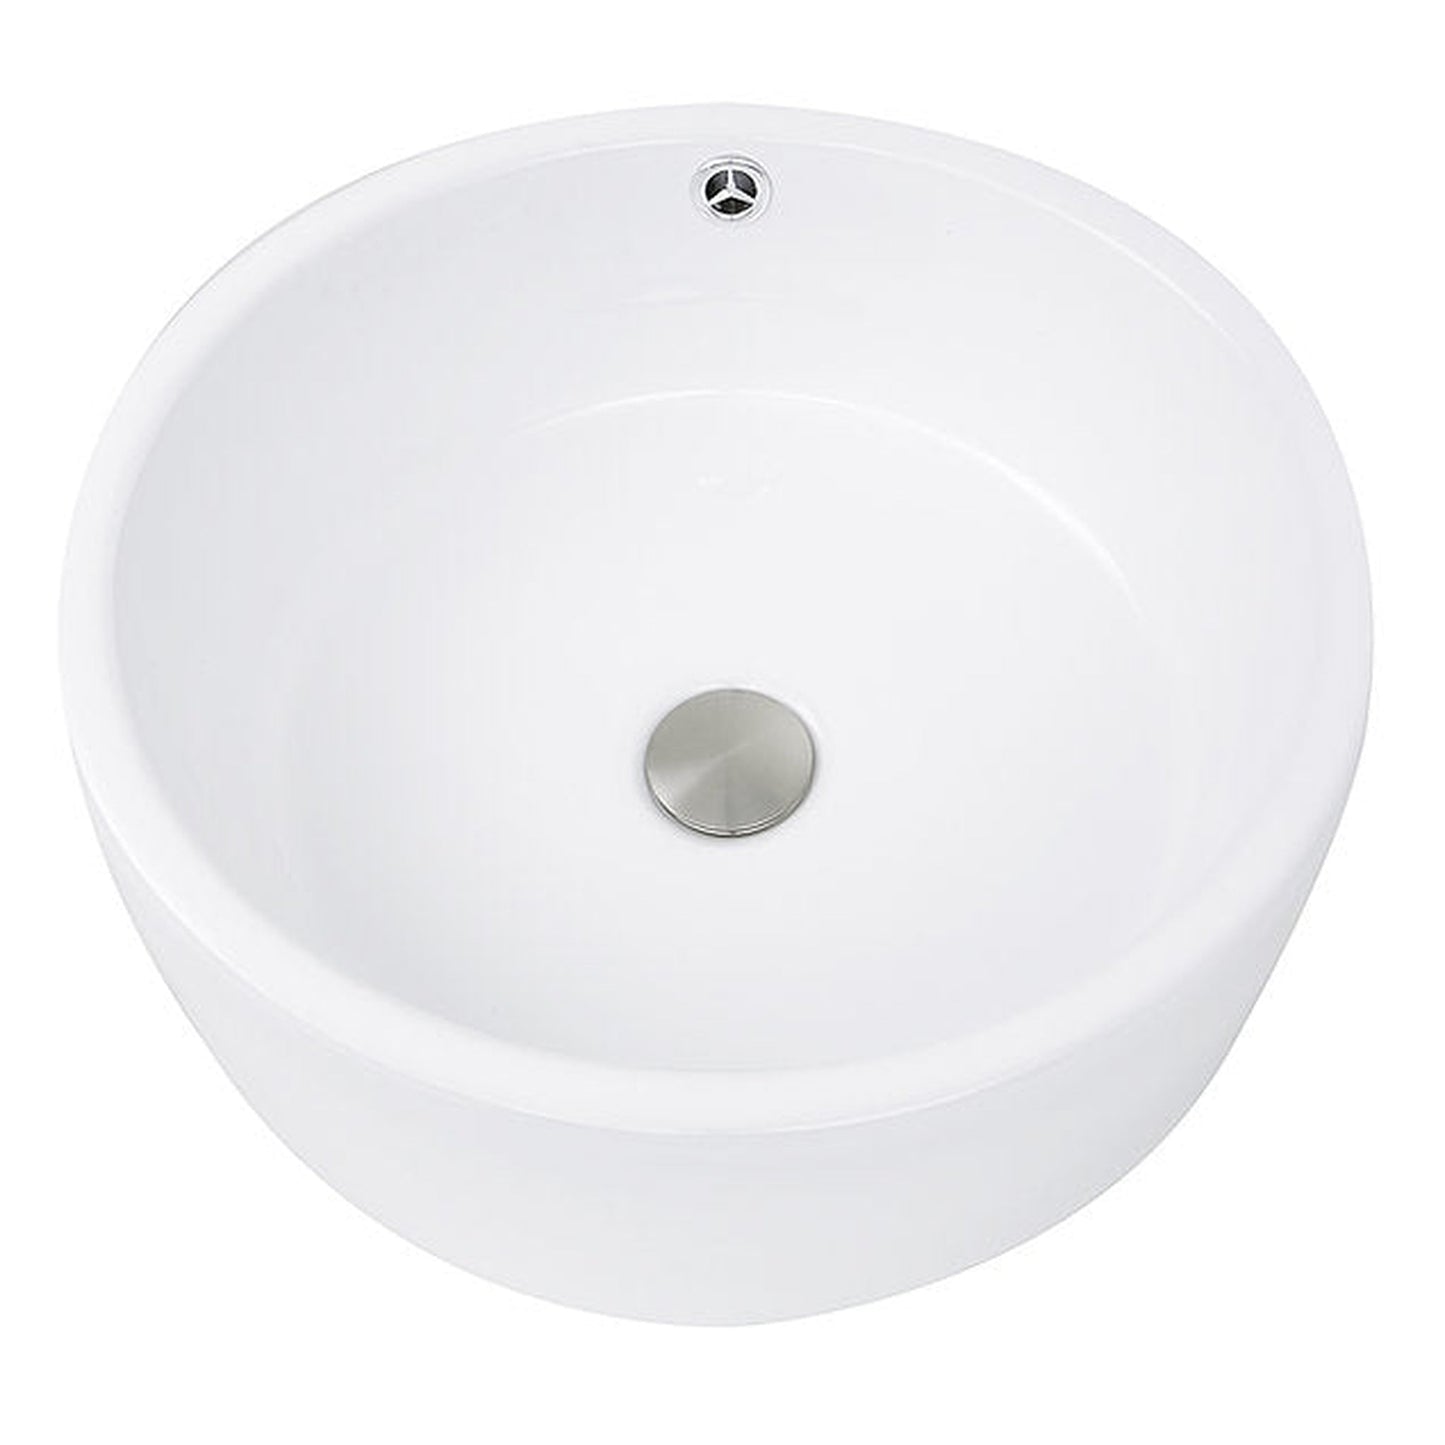 Nantucket Sinks Brant Point 17" Round Porcelain Enamel Glazed White Ceramic Vessel Sink With Overflow